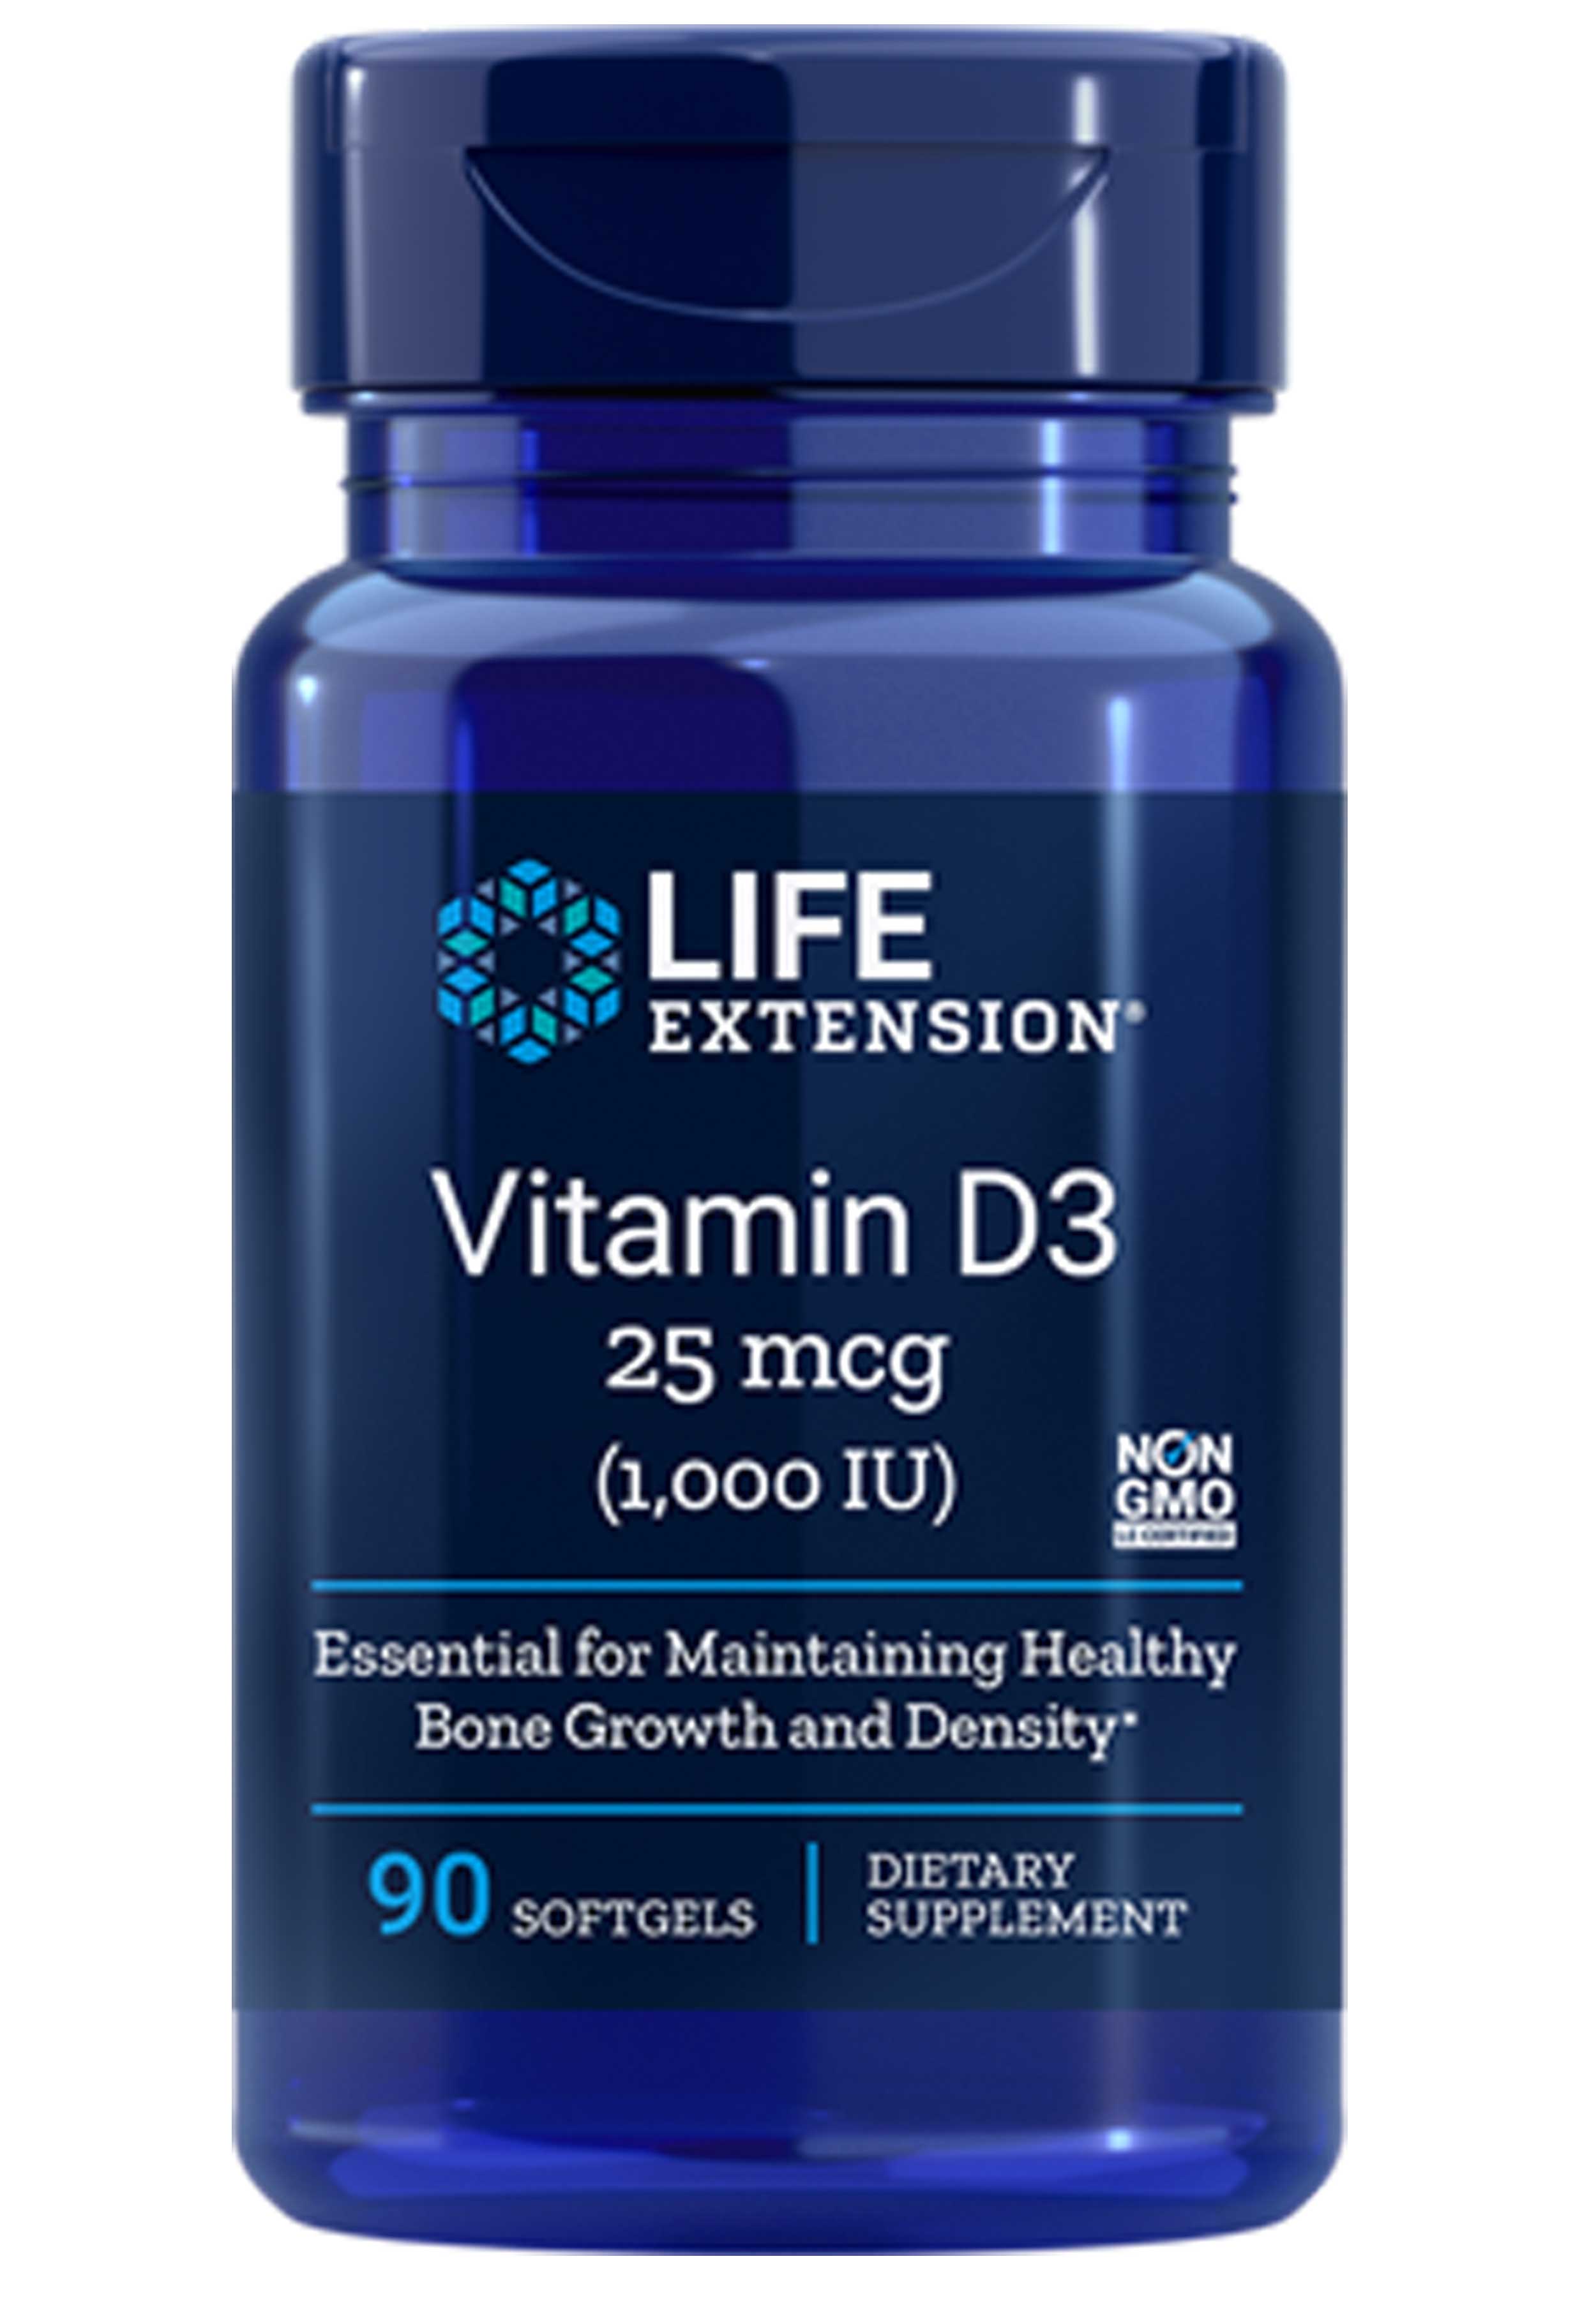 Life Extension Vitamin D3 